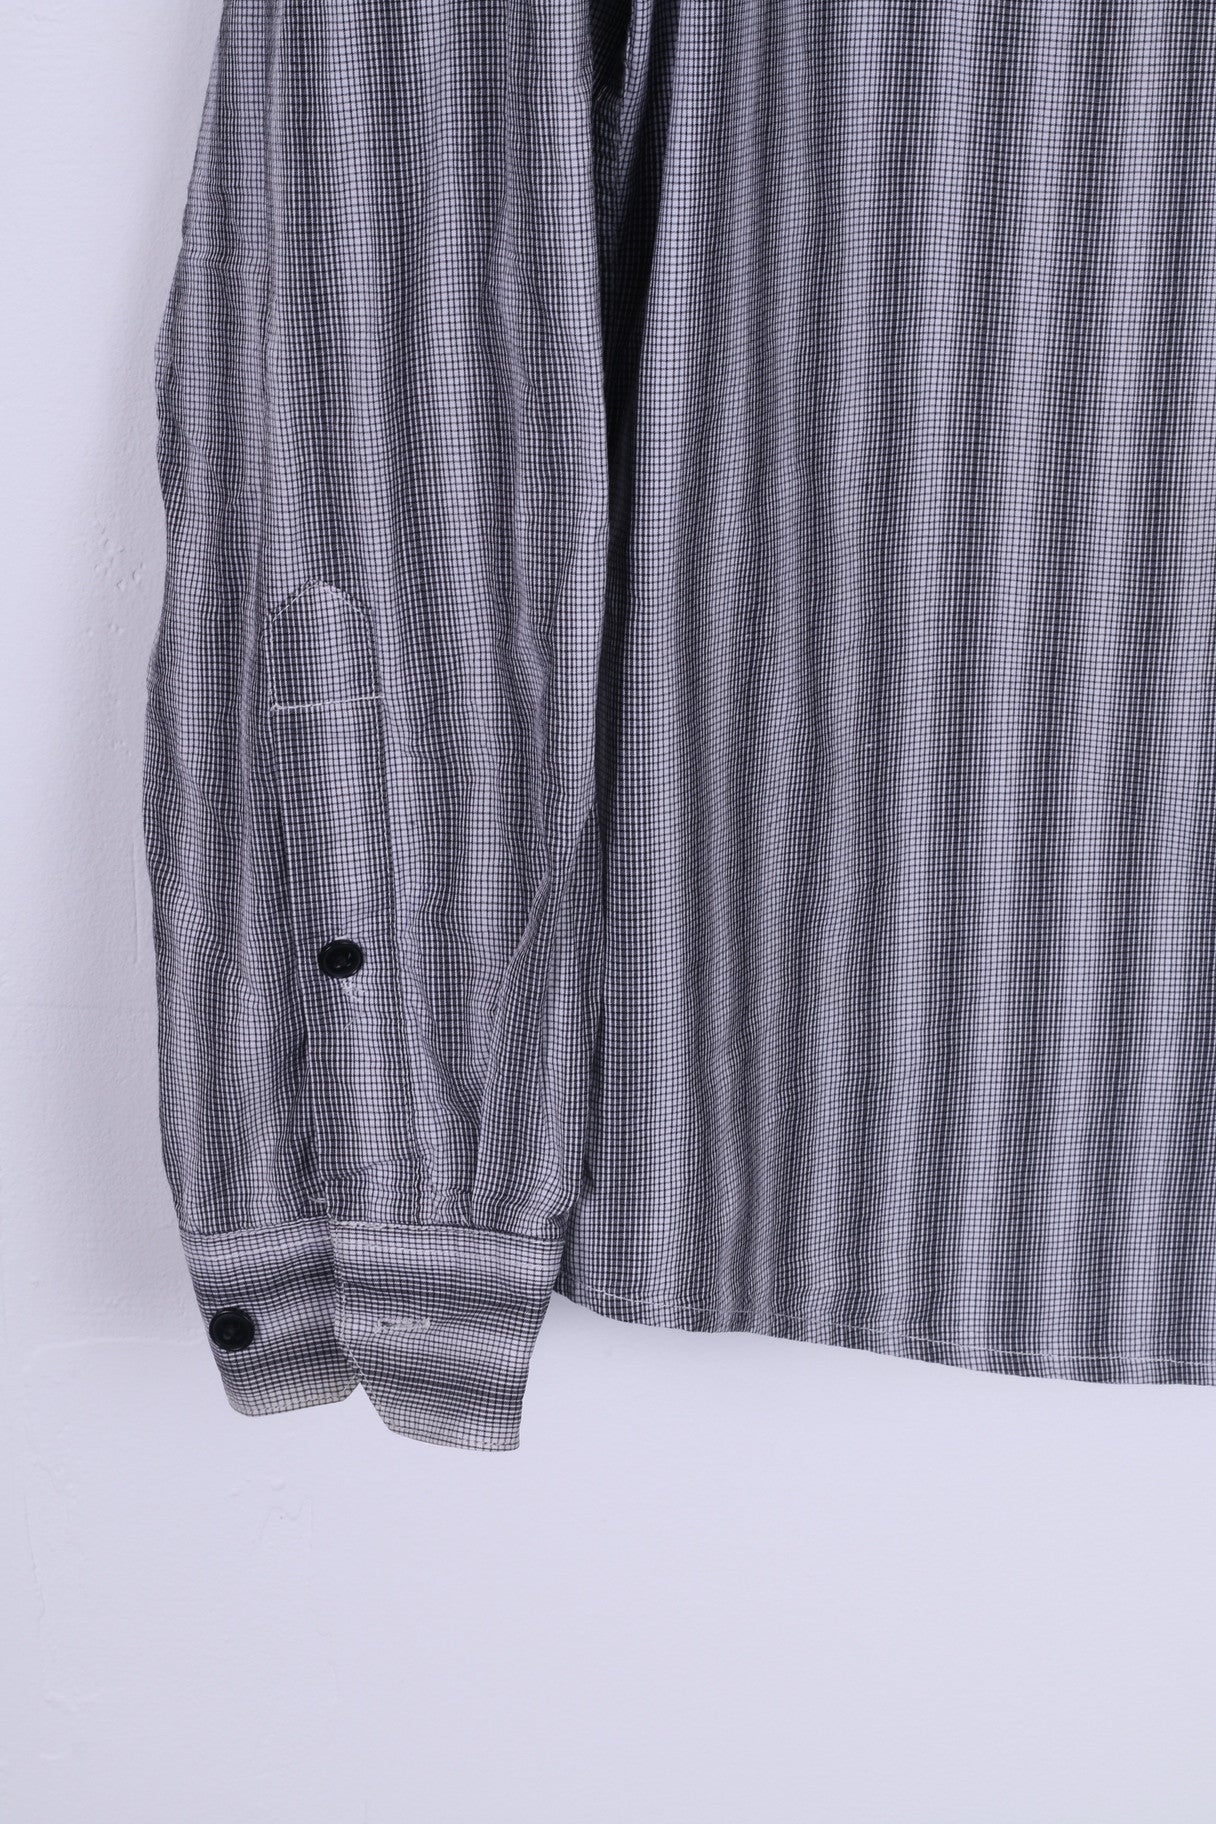 Camicia casual H&amp;M da uomo L (M) a maniche lunghe in cotone a righe bianche nere